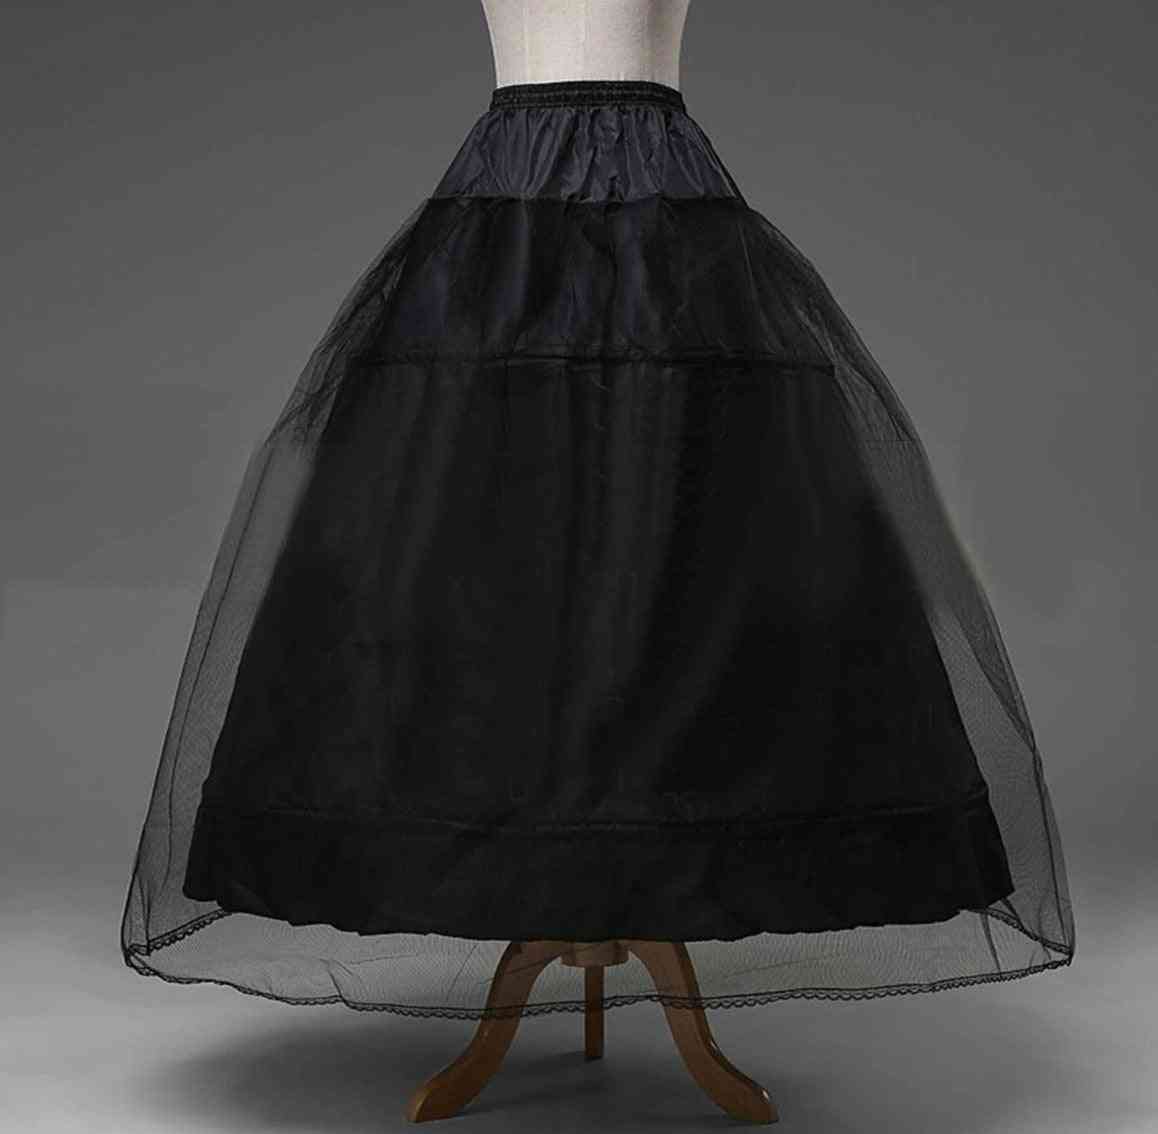 Bridal Petticoat Crinoline Underskirt Hoop